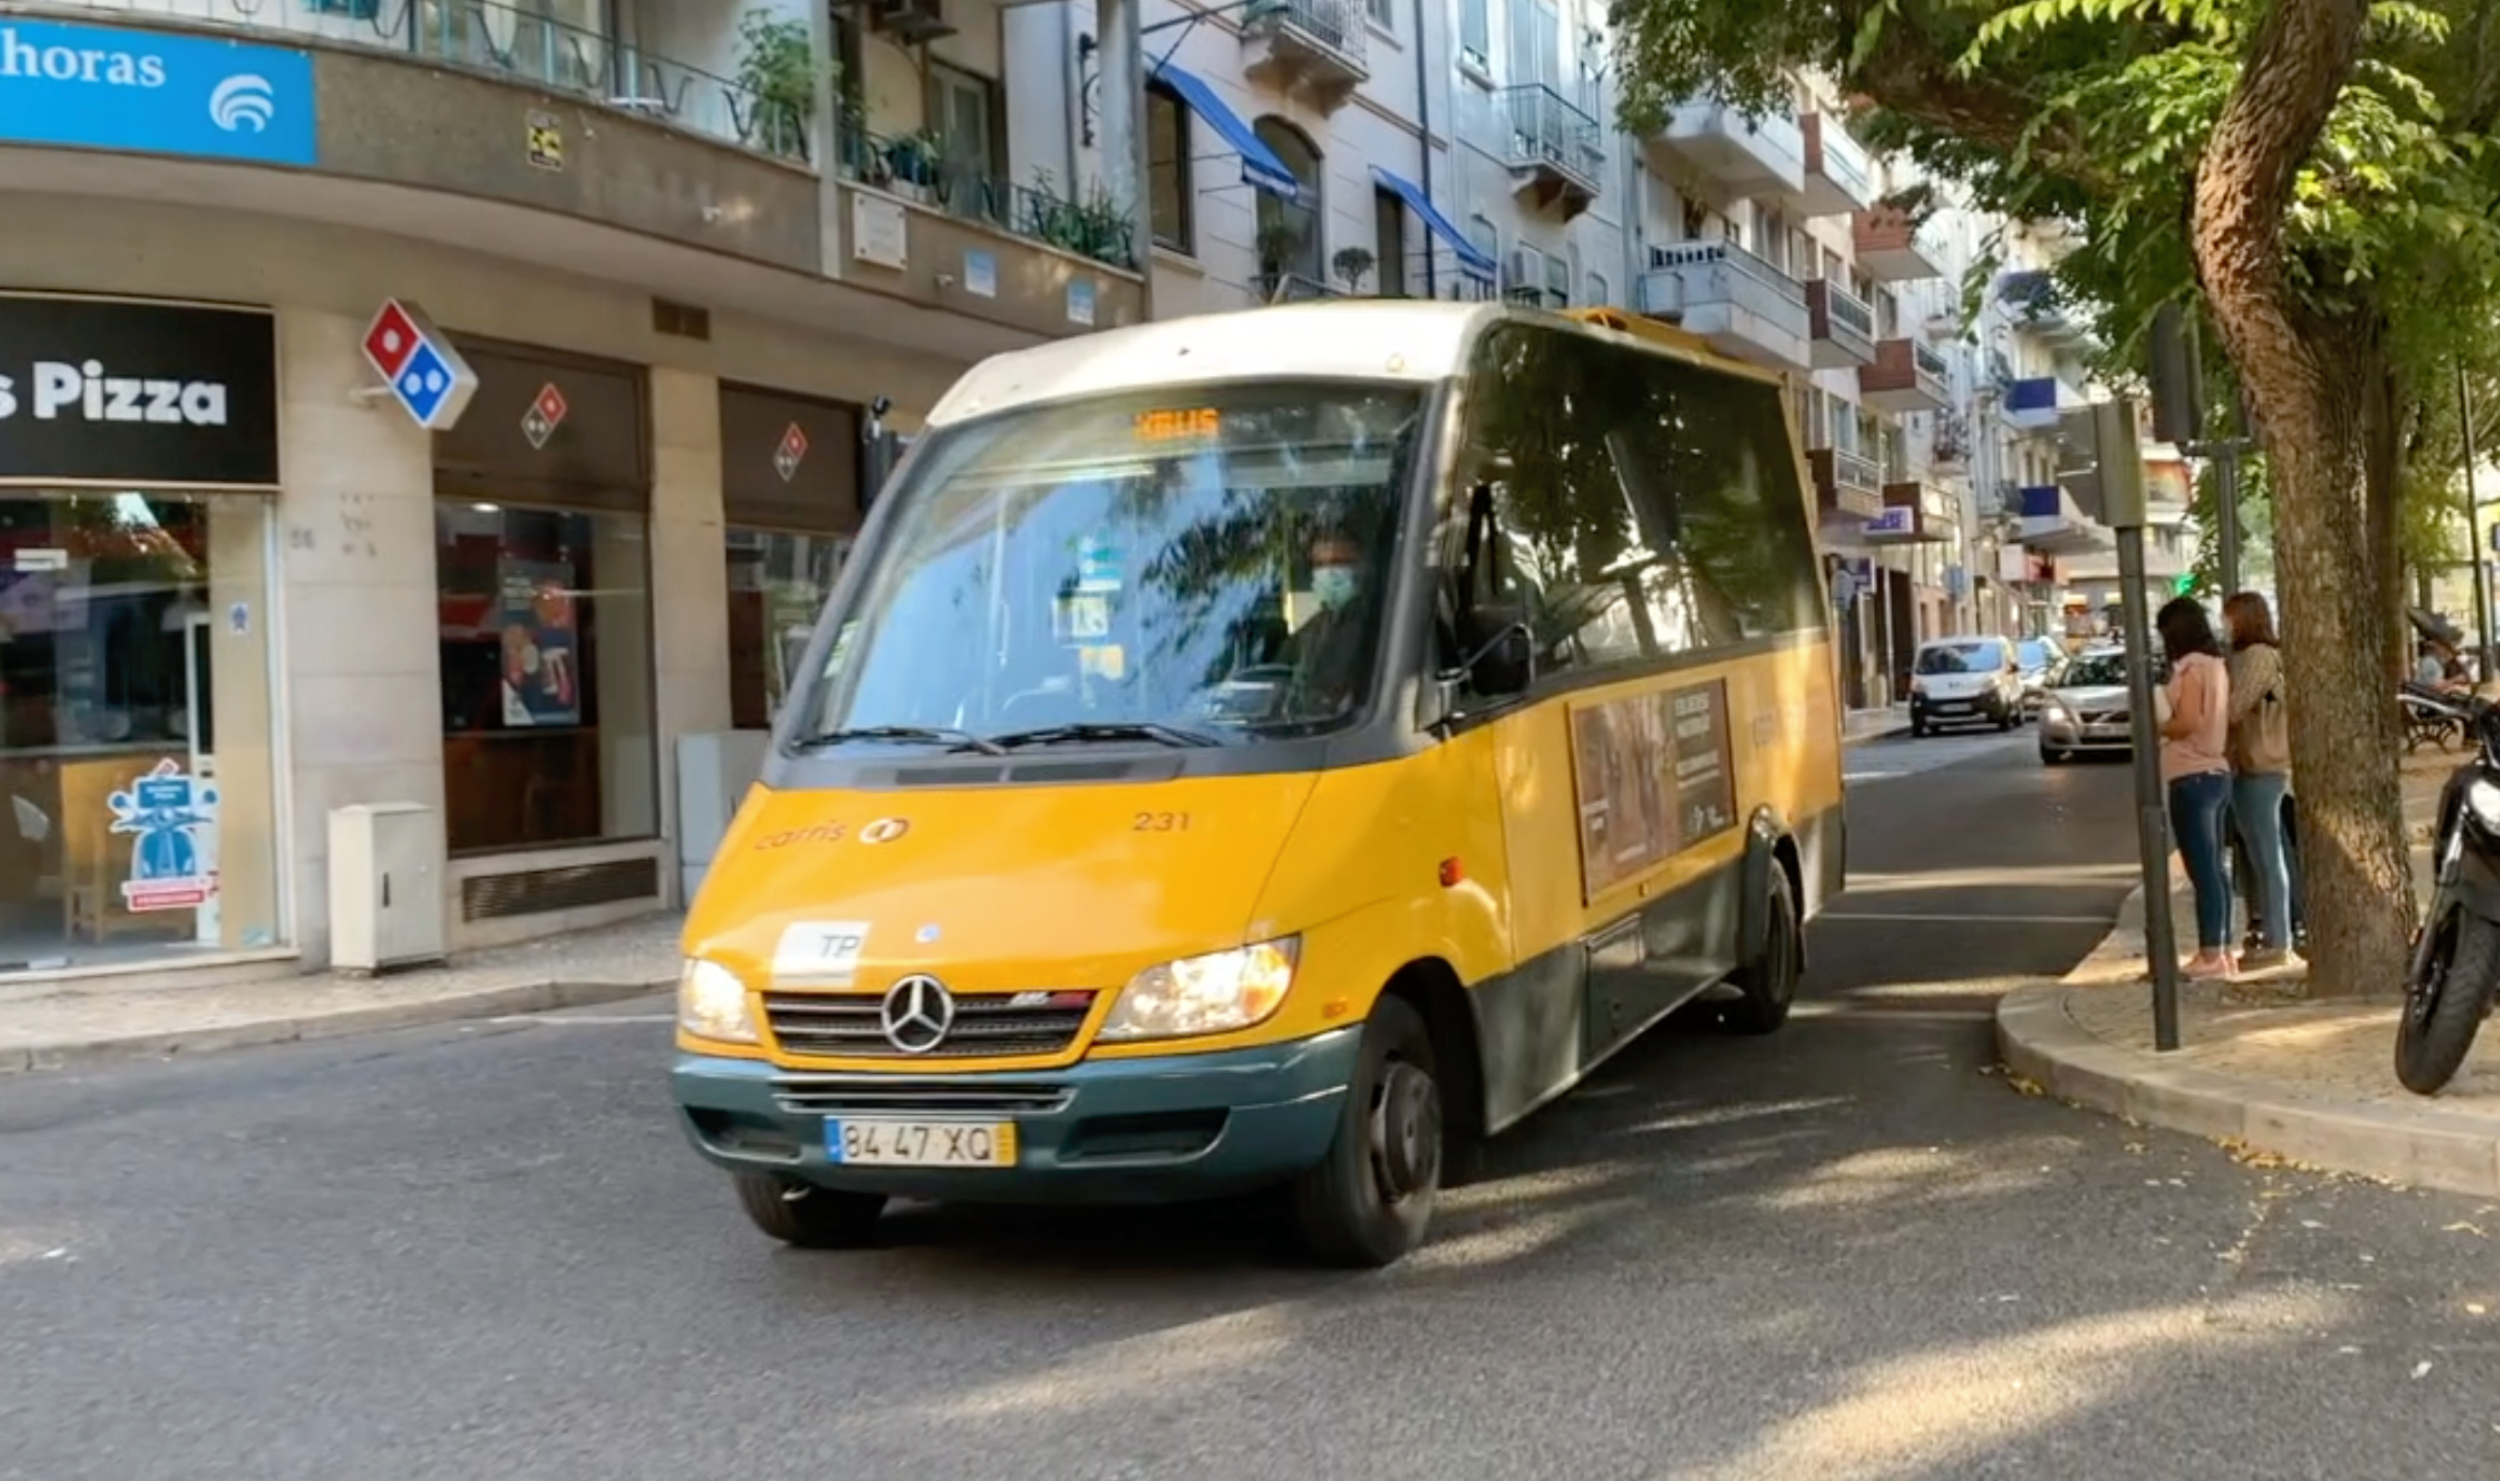 Shotl XBus app Carris Ride Now Lisbon Portugal  demand responsive transit Avenidas Novas